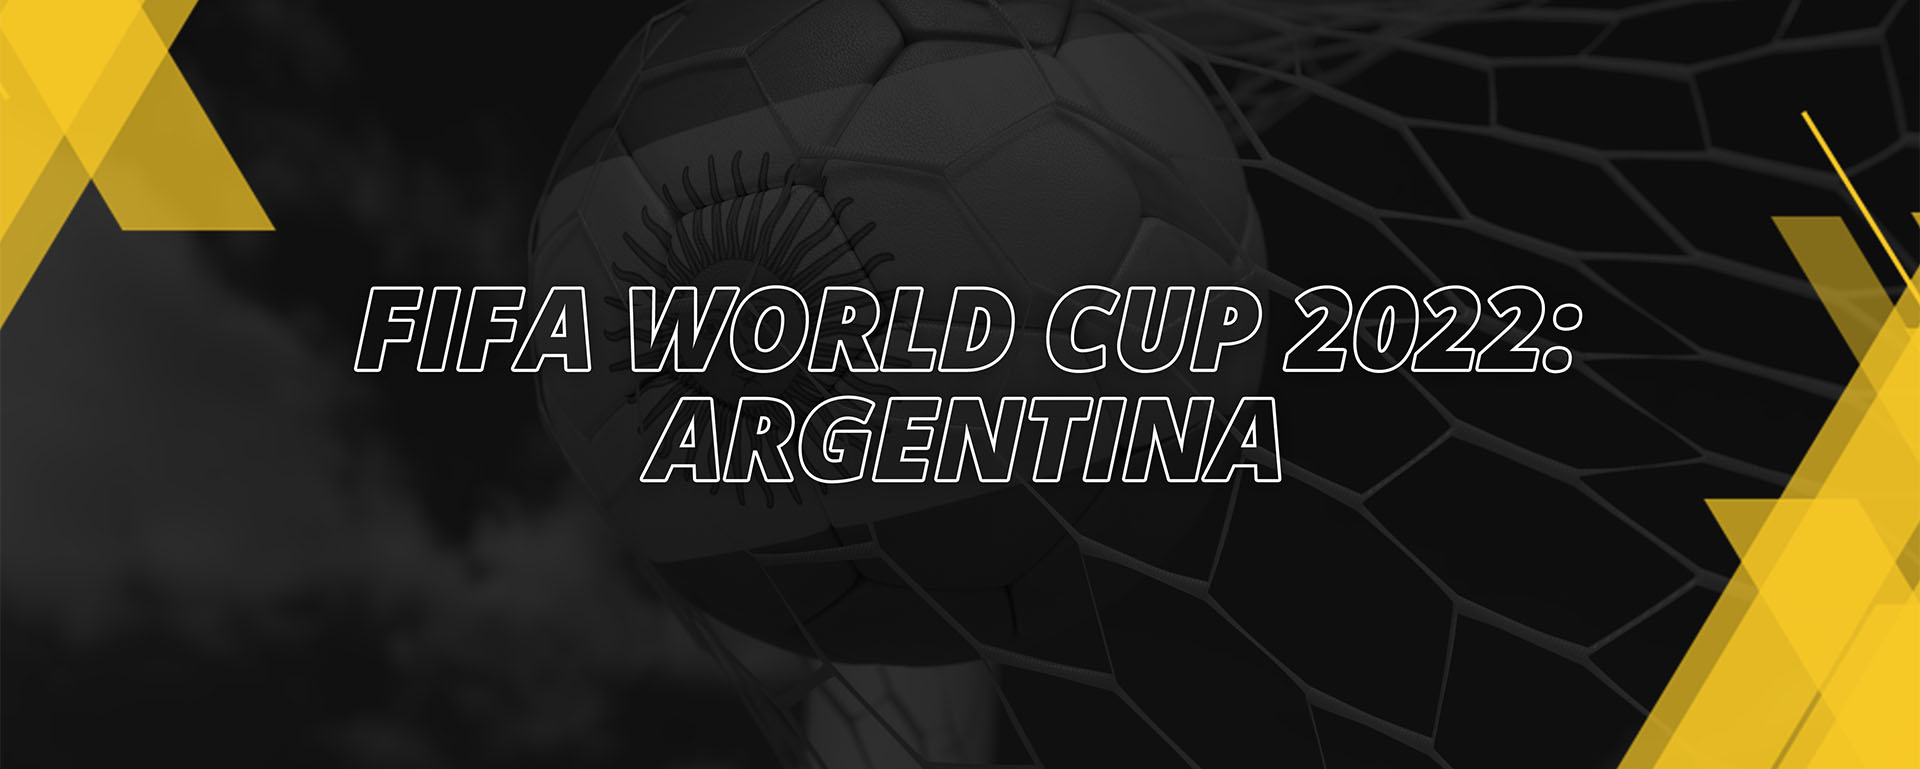 ARGENTINA – FIFA WORLD CUP QATAR 2022 – FAN’S COMPENDIUM